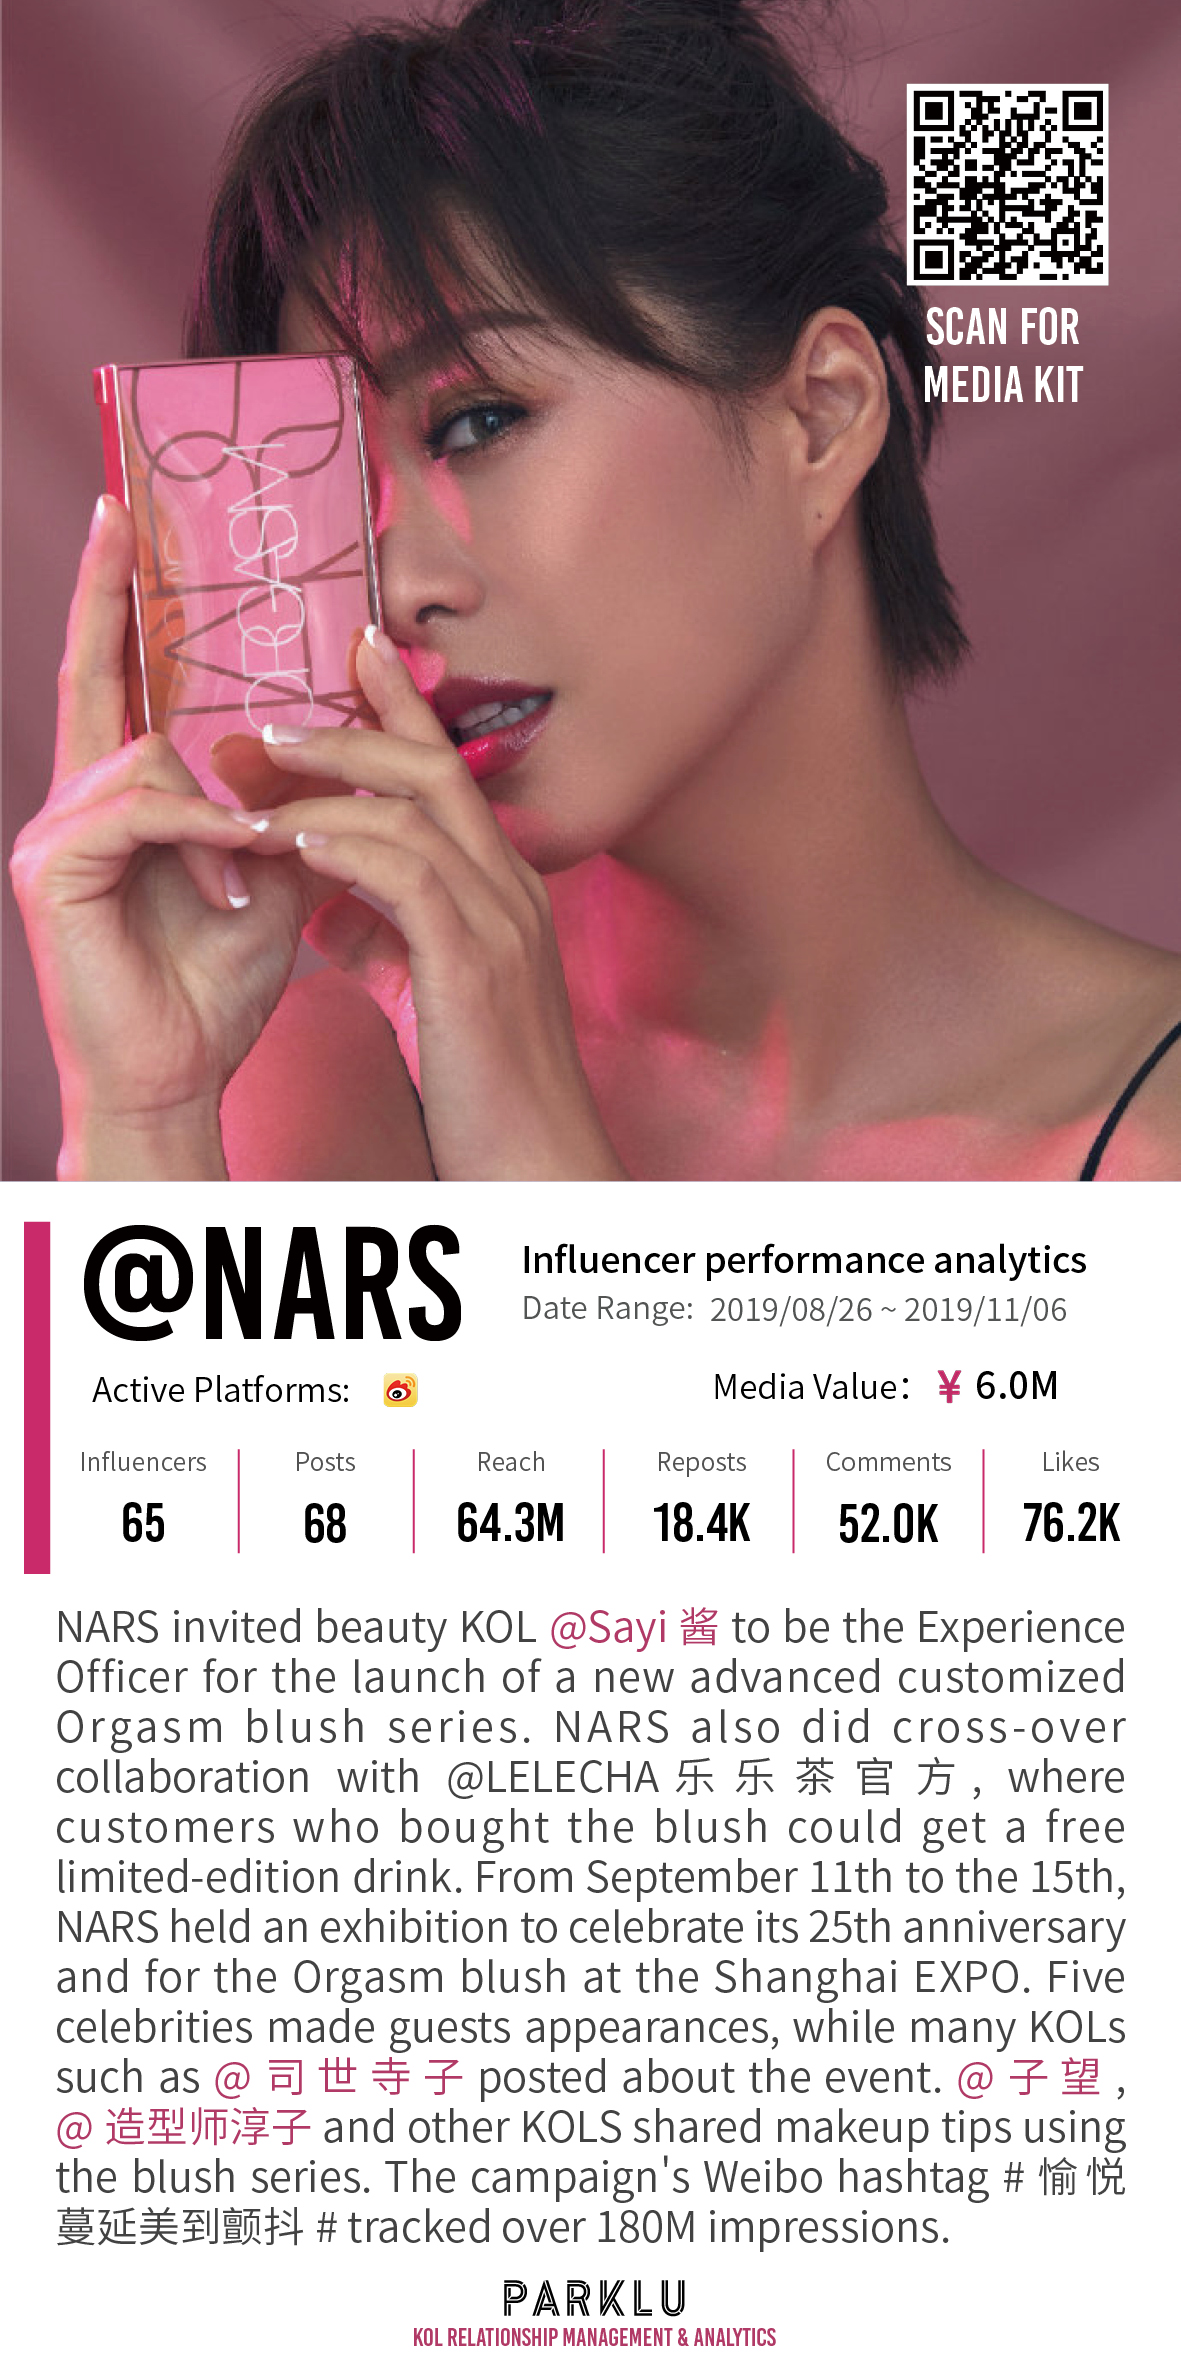 NARS New Advanced Customized Orgasm Blush Series